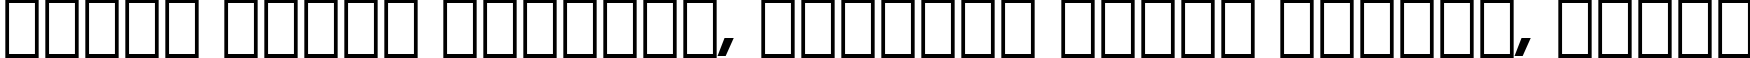 Пример написания шрифтом Geometric 415 Black Italic BT текста на белорусском